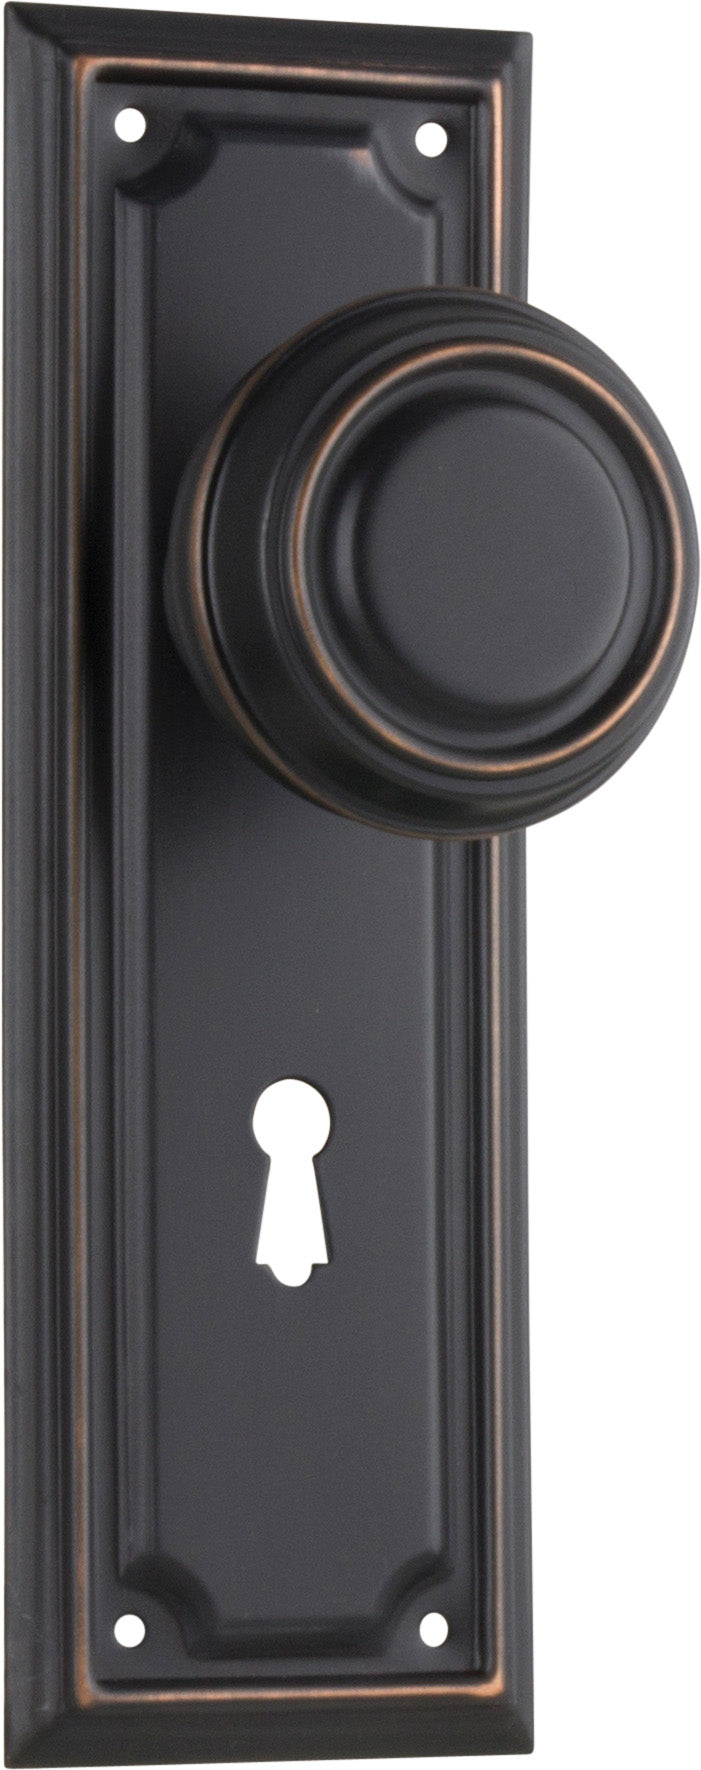 Edwardian Door Knob - Long Backplate by Tradco